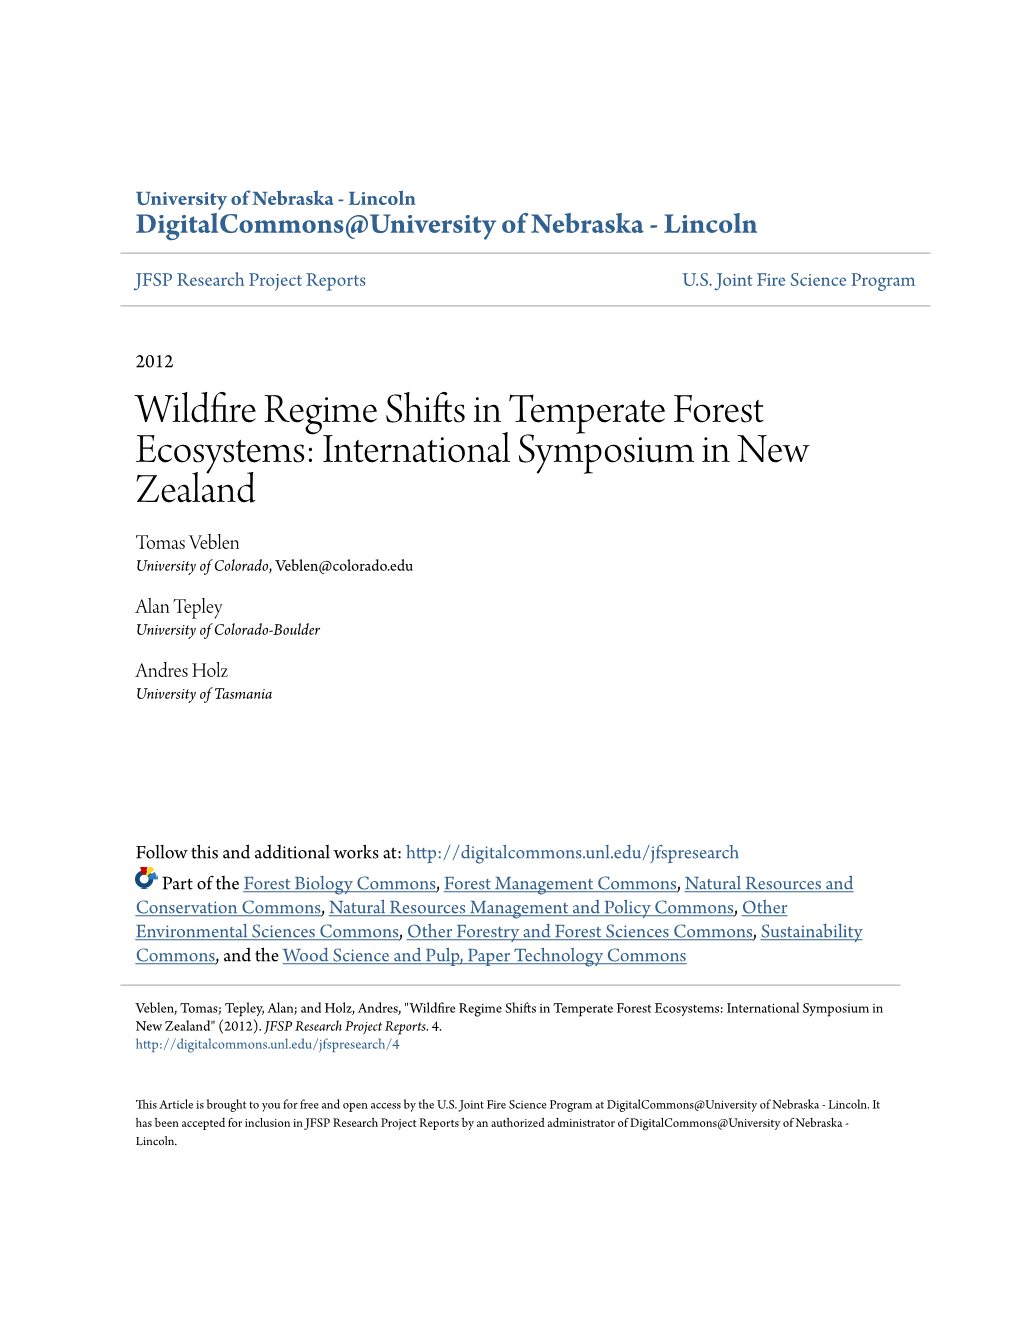 Wildfire Regime Shifts in Temperate Forest Ecosystems: International Symposium in New Zealand Tomas Veblen University of Colorado, Veblen@Colorado.Edu